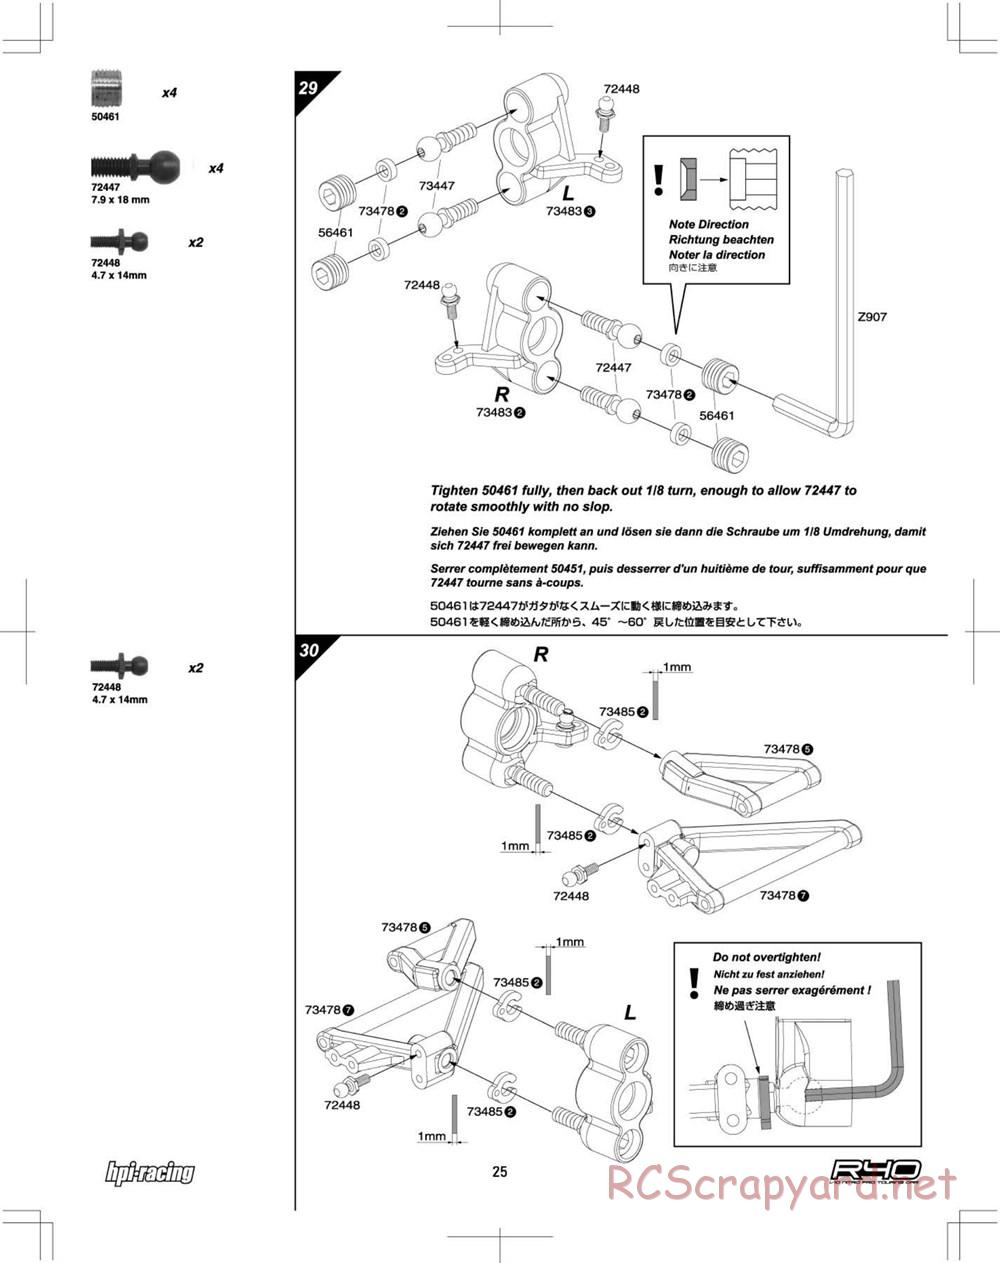 HPI - R40 Nitro Touring Car - Manual - Page 25